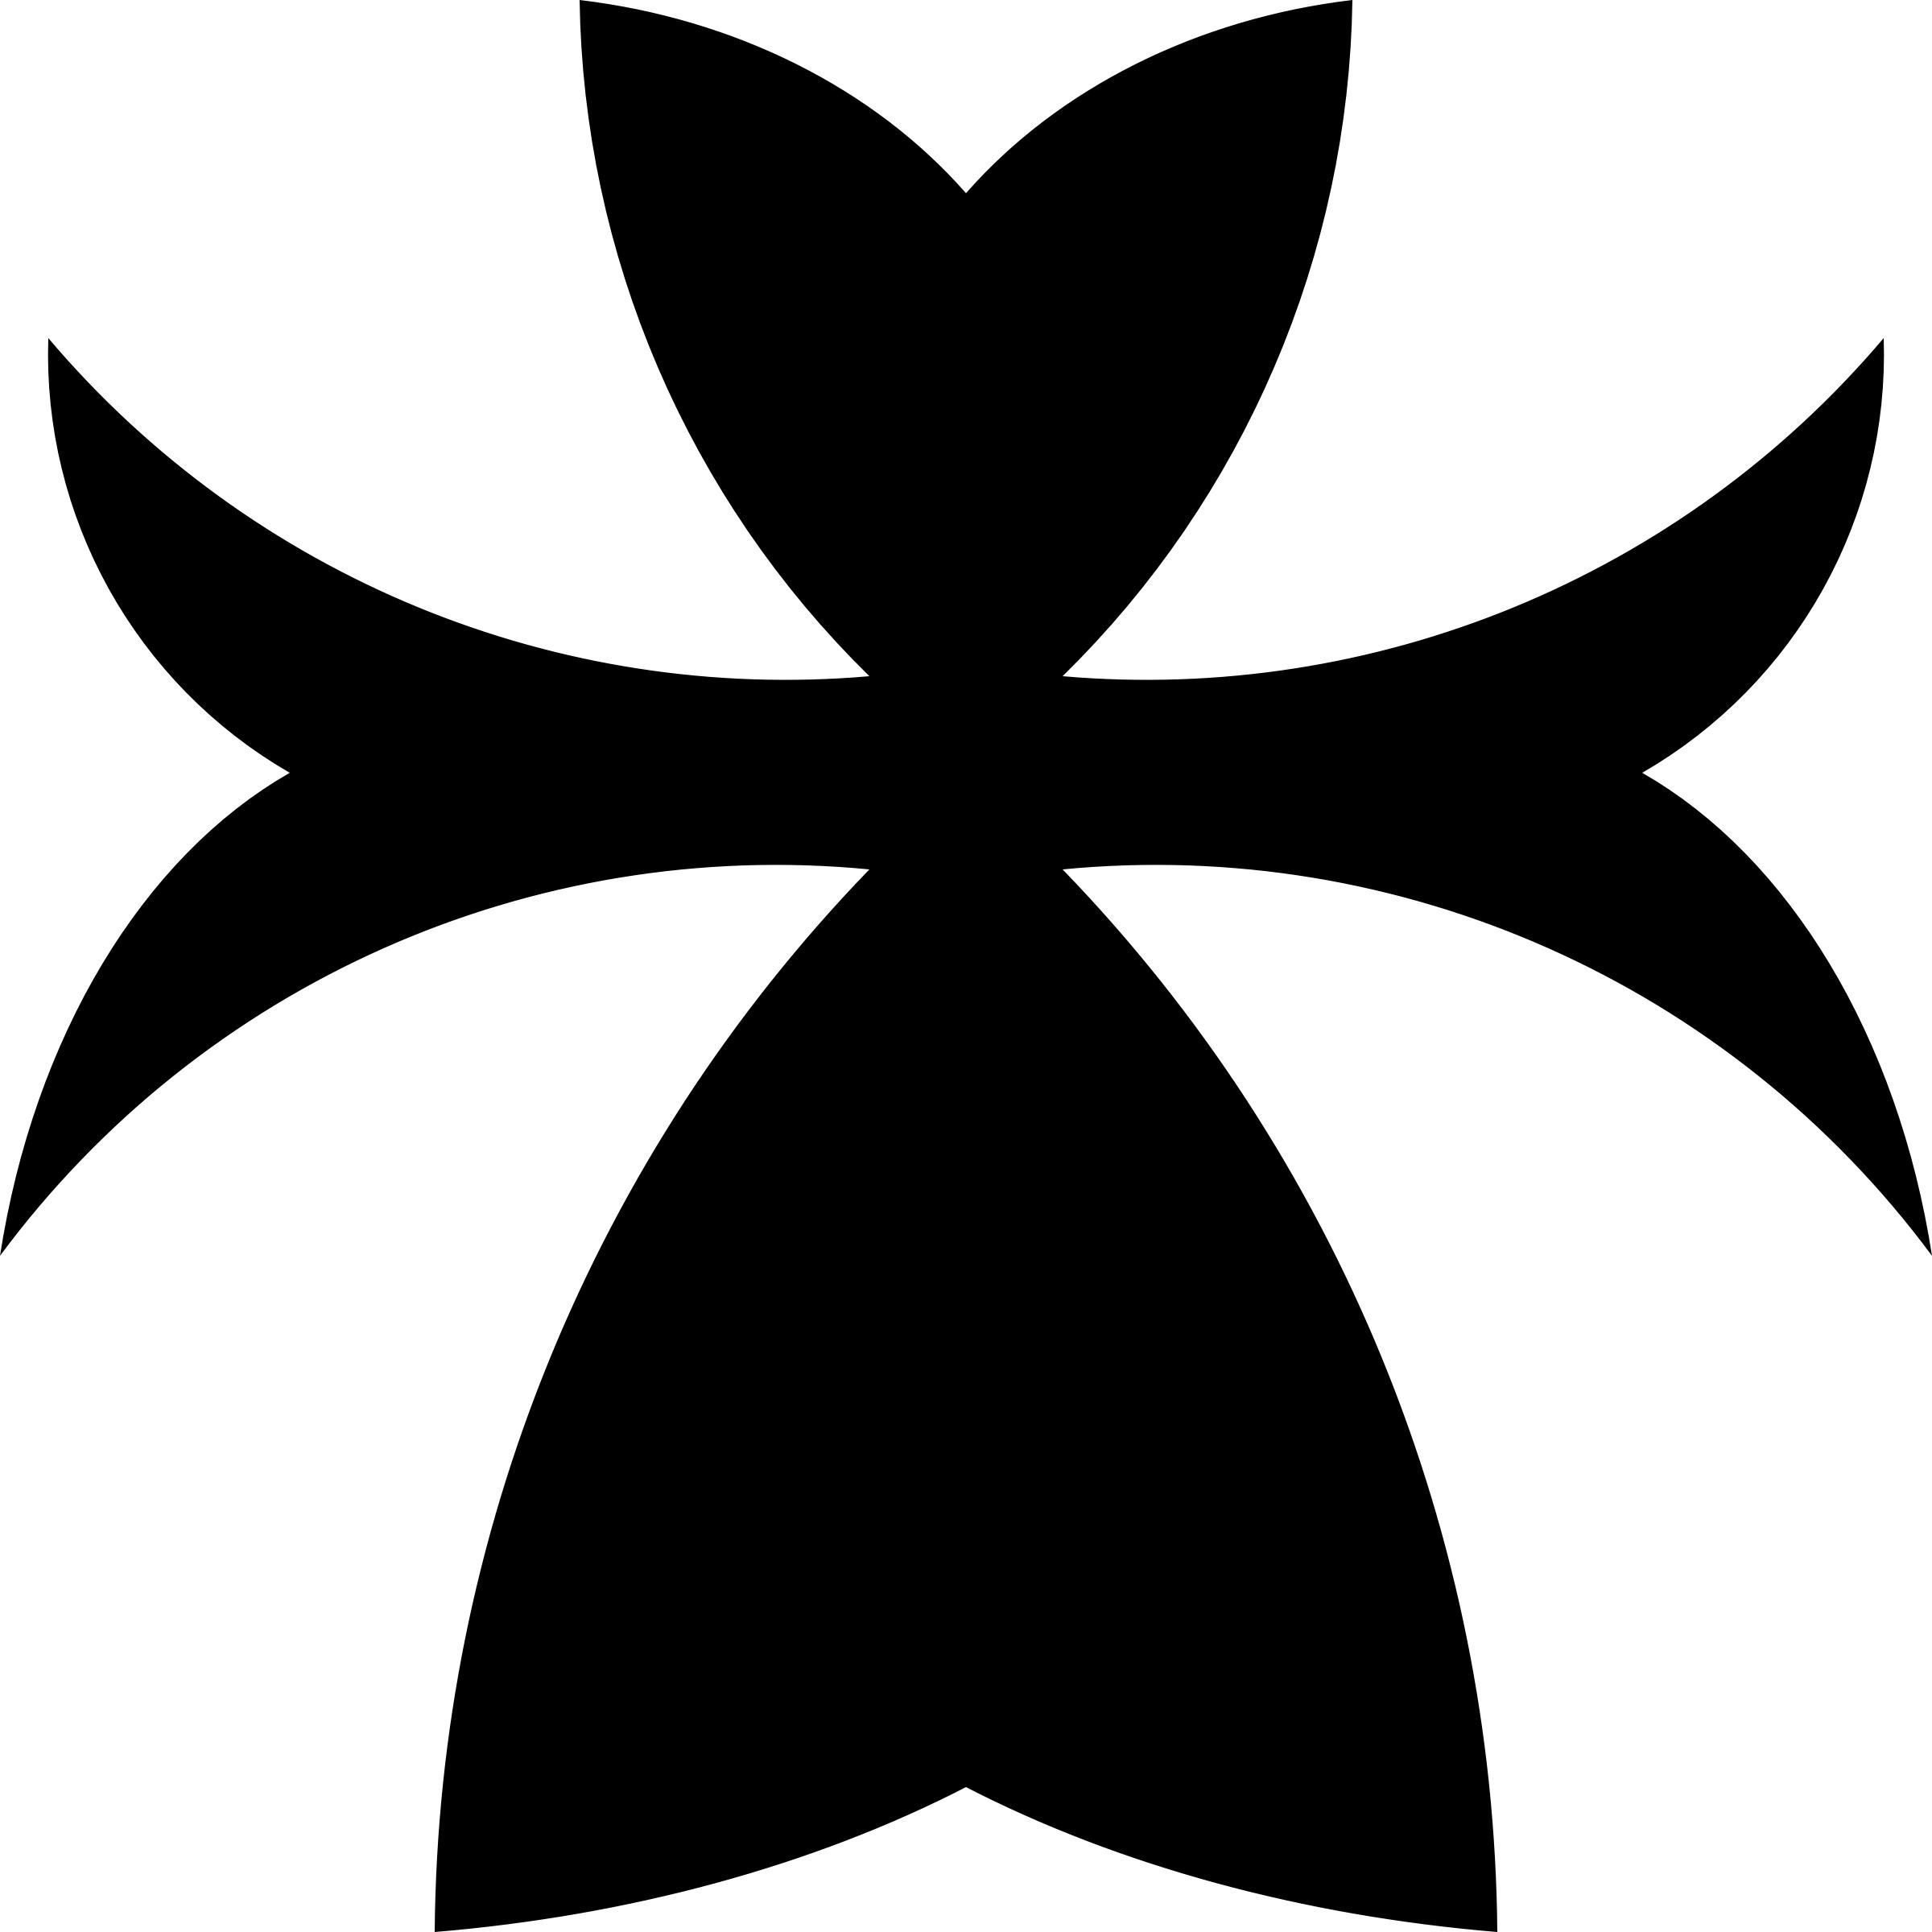 Cross CL icons